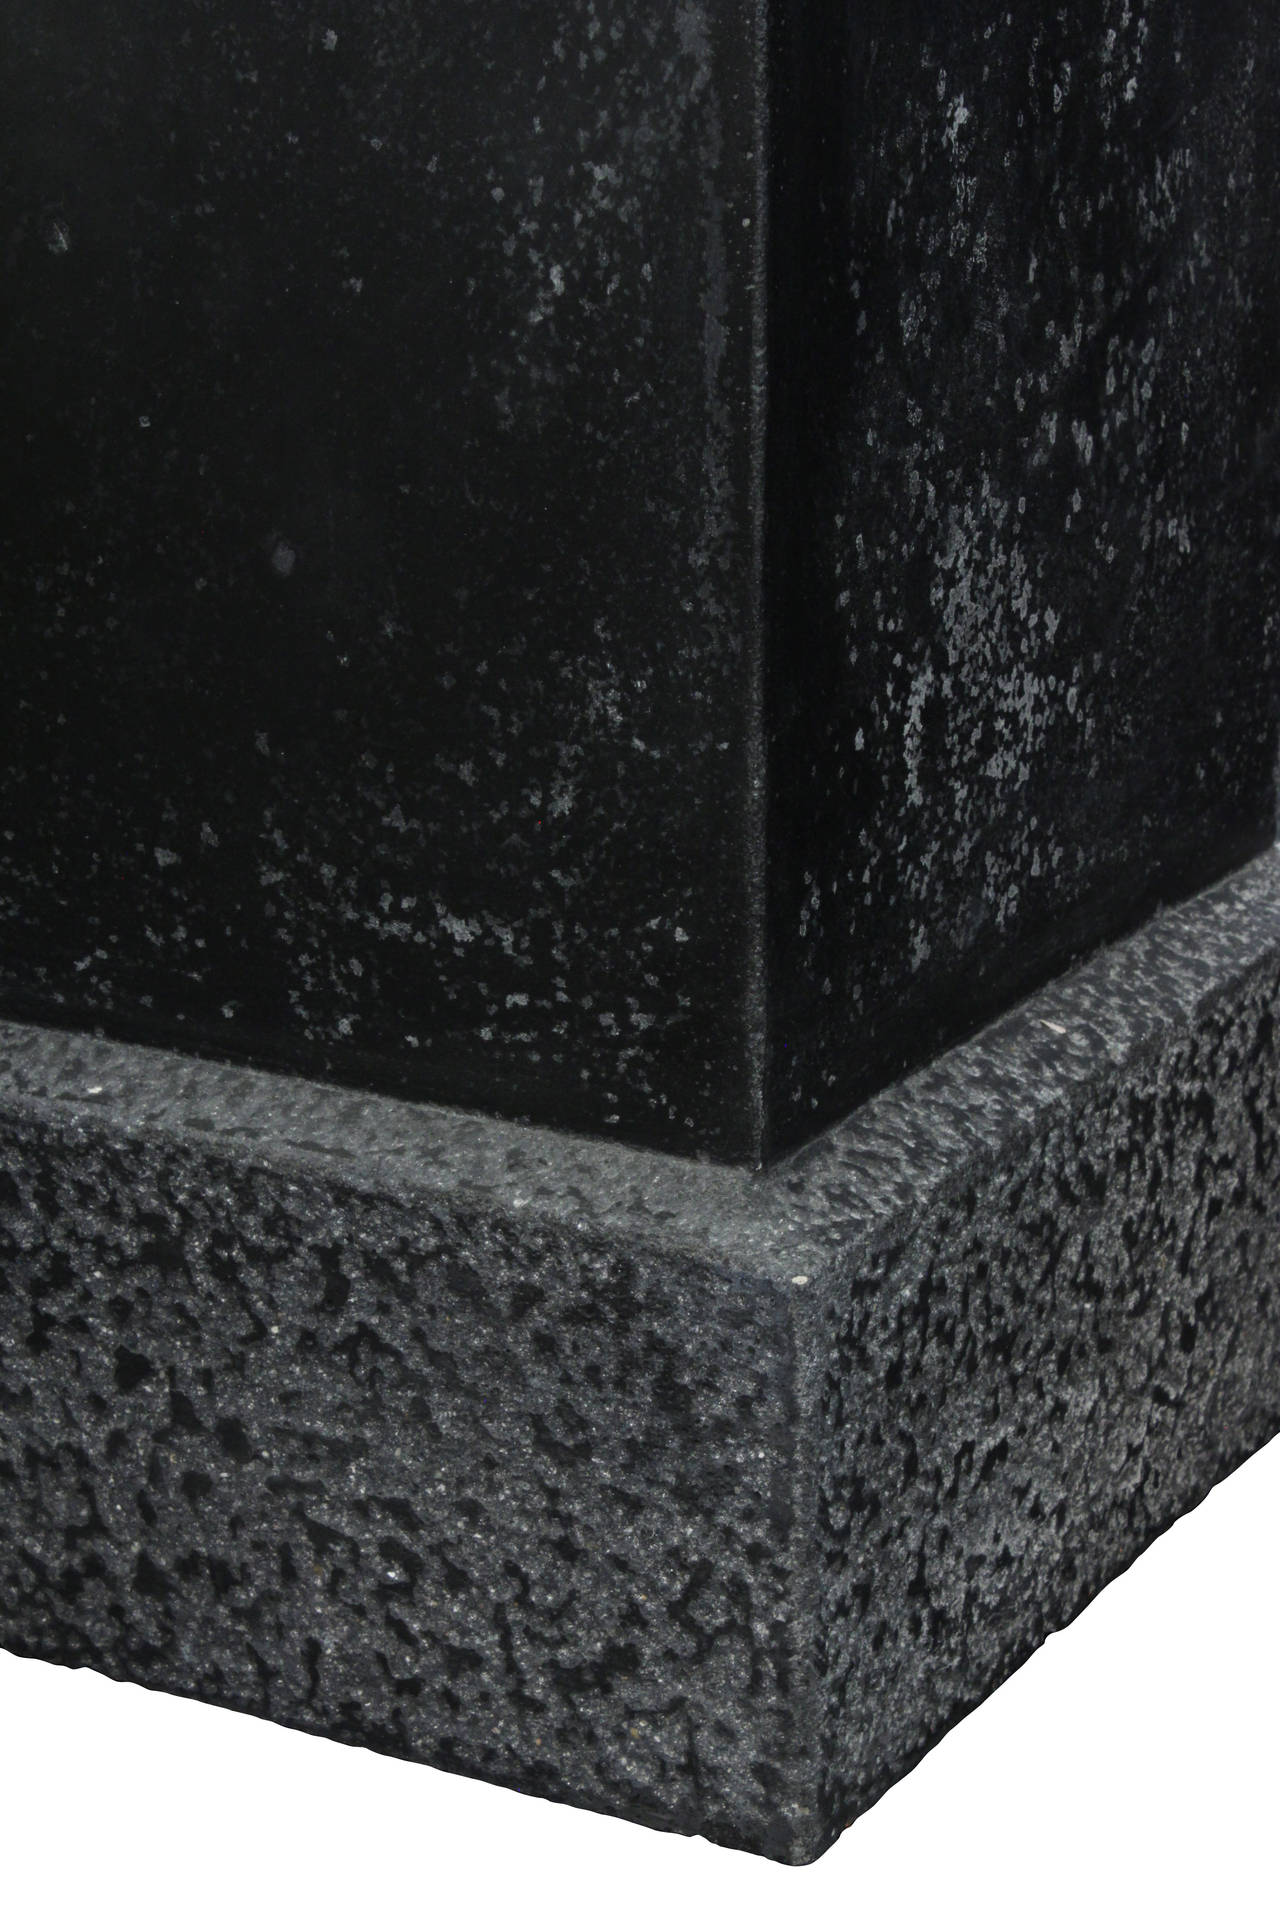 Mid-Century Modern Black Granite Pedestal by Karl Springer